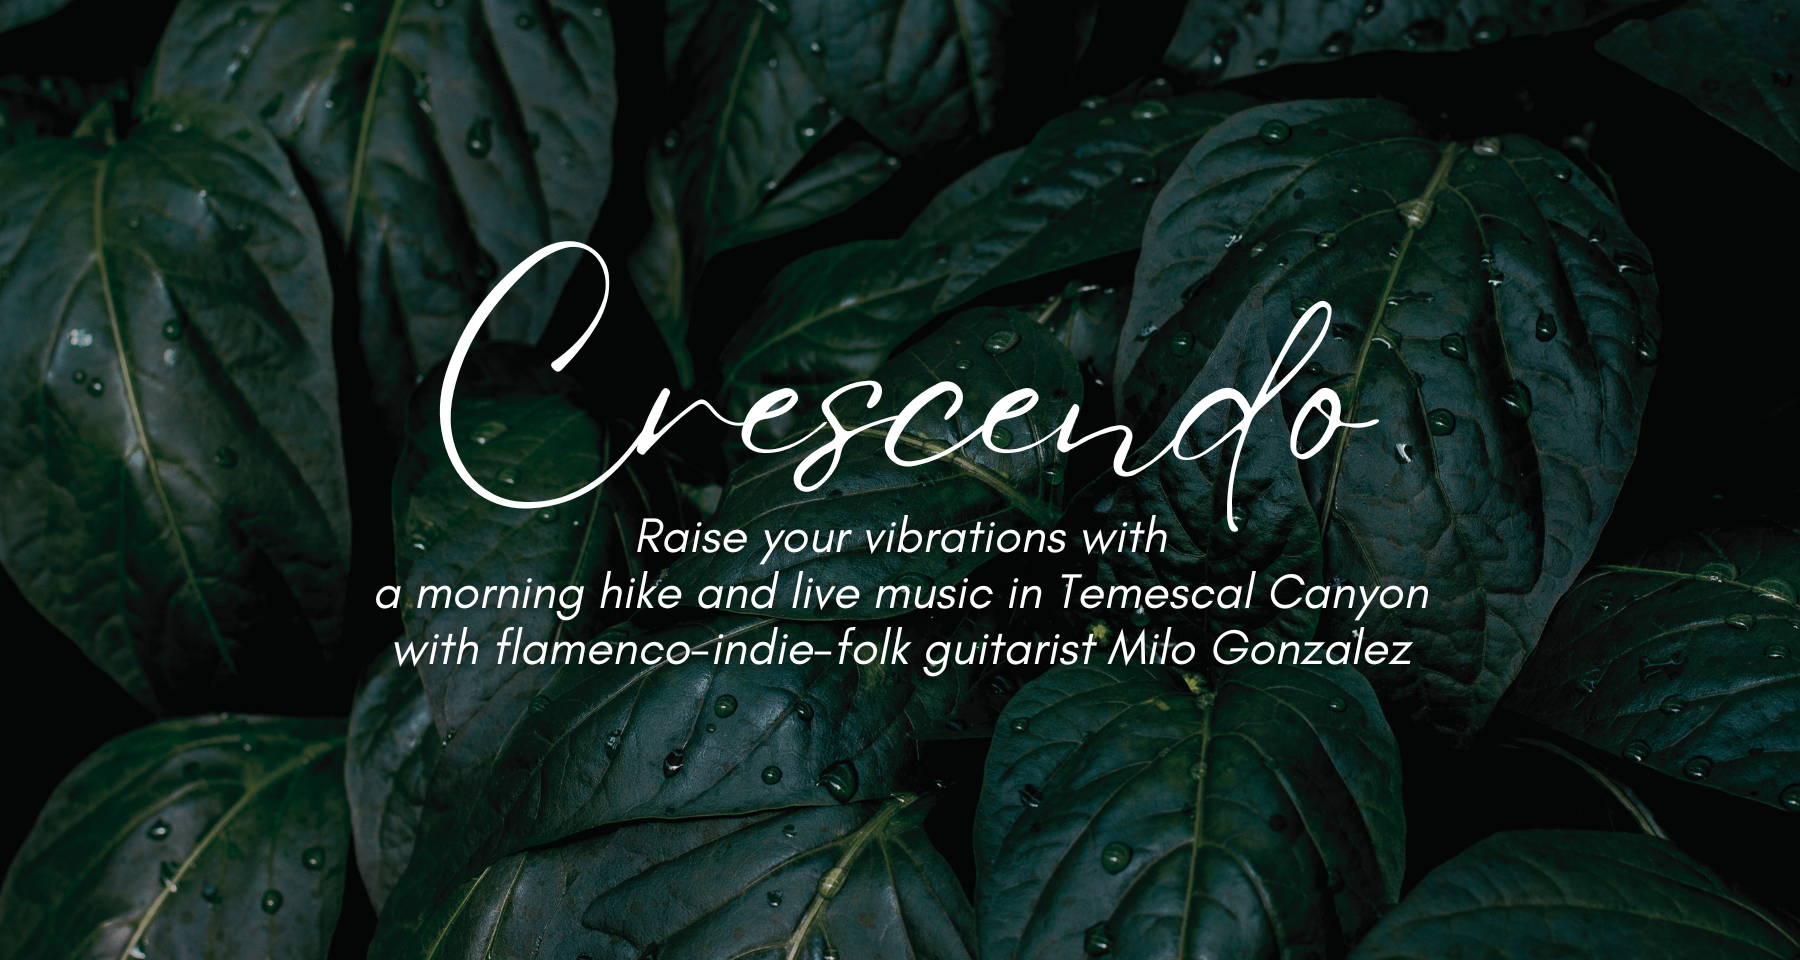 Crescendo: Hiking & Flamenco in Temescal Canyon